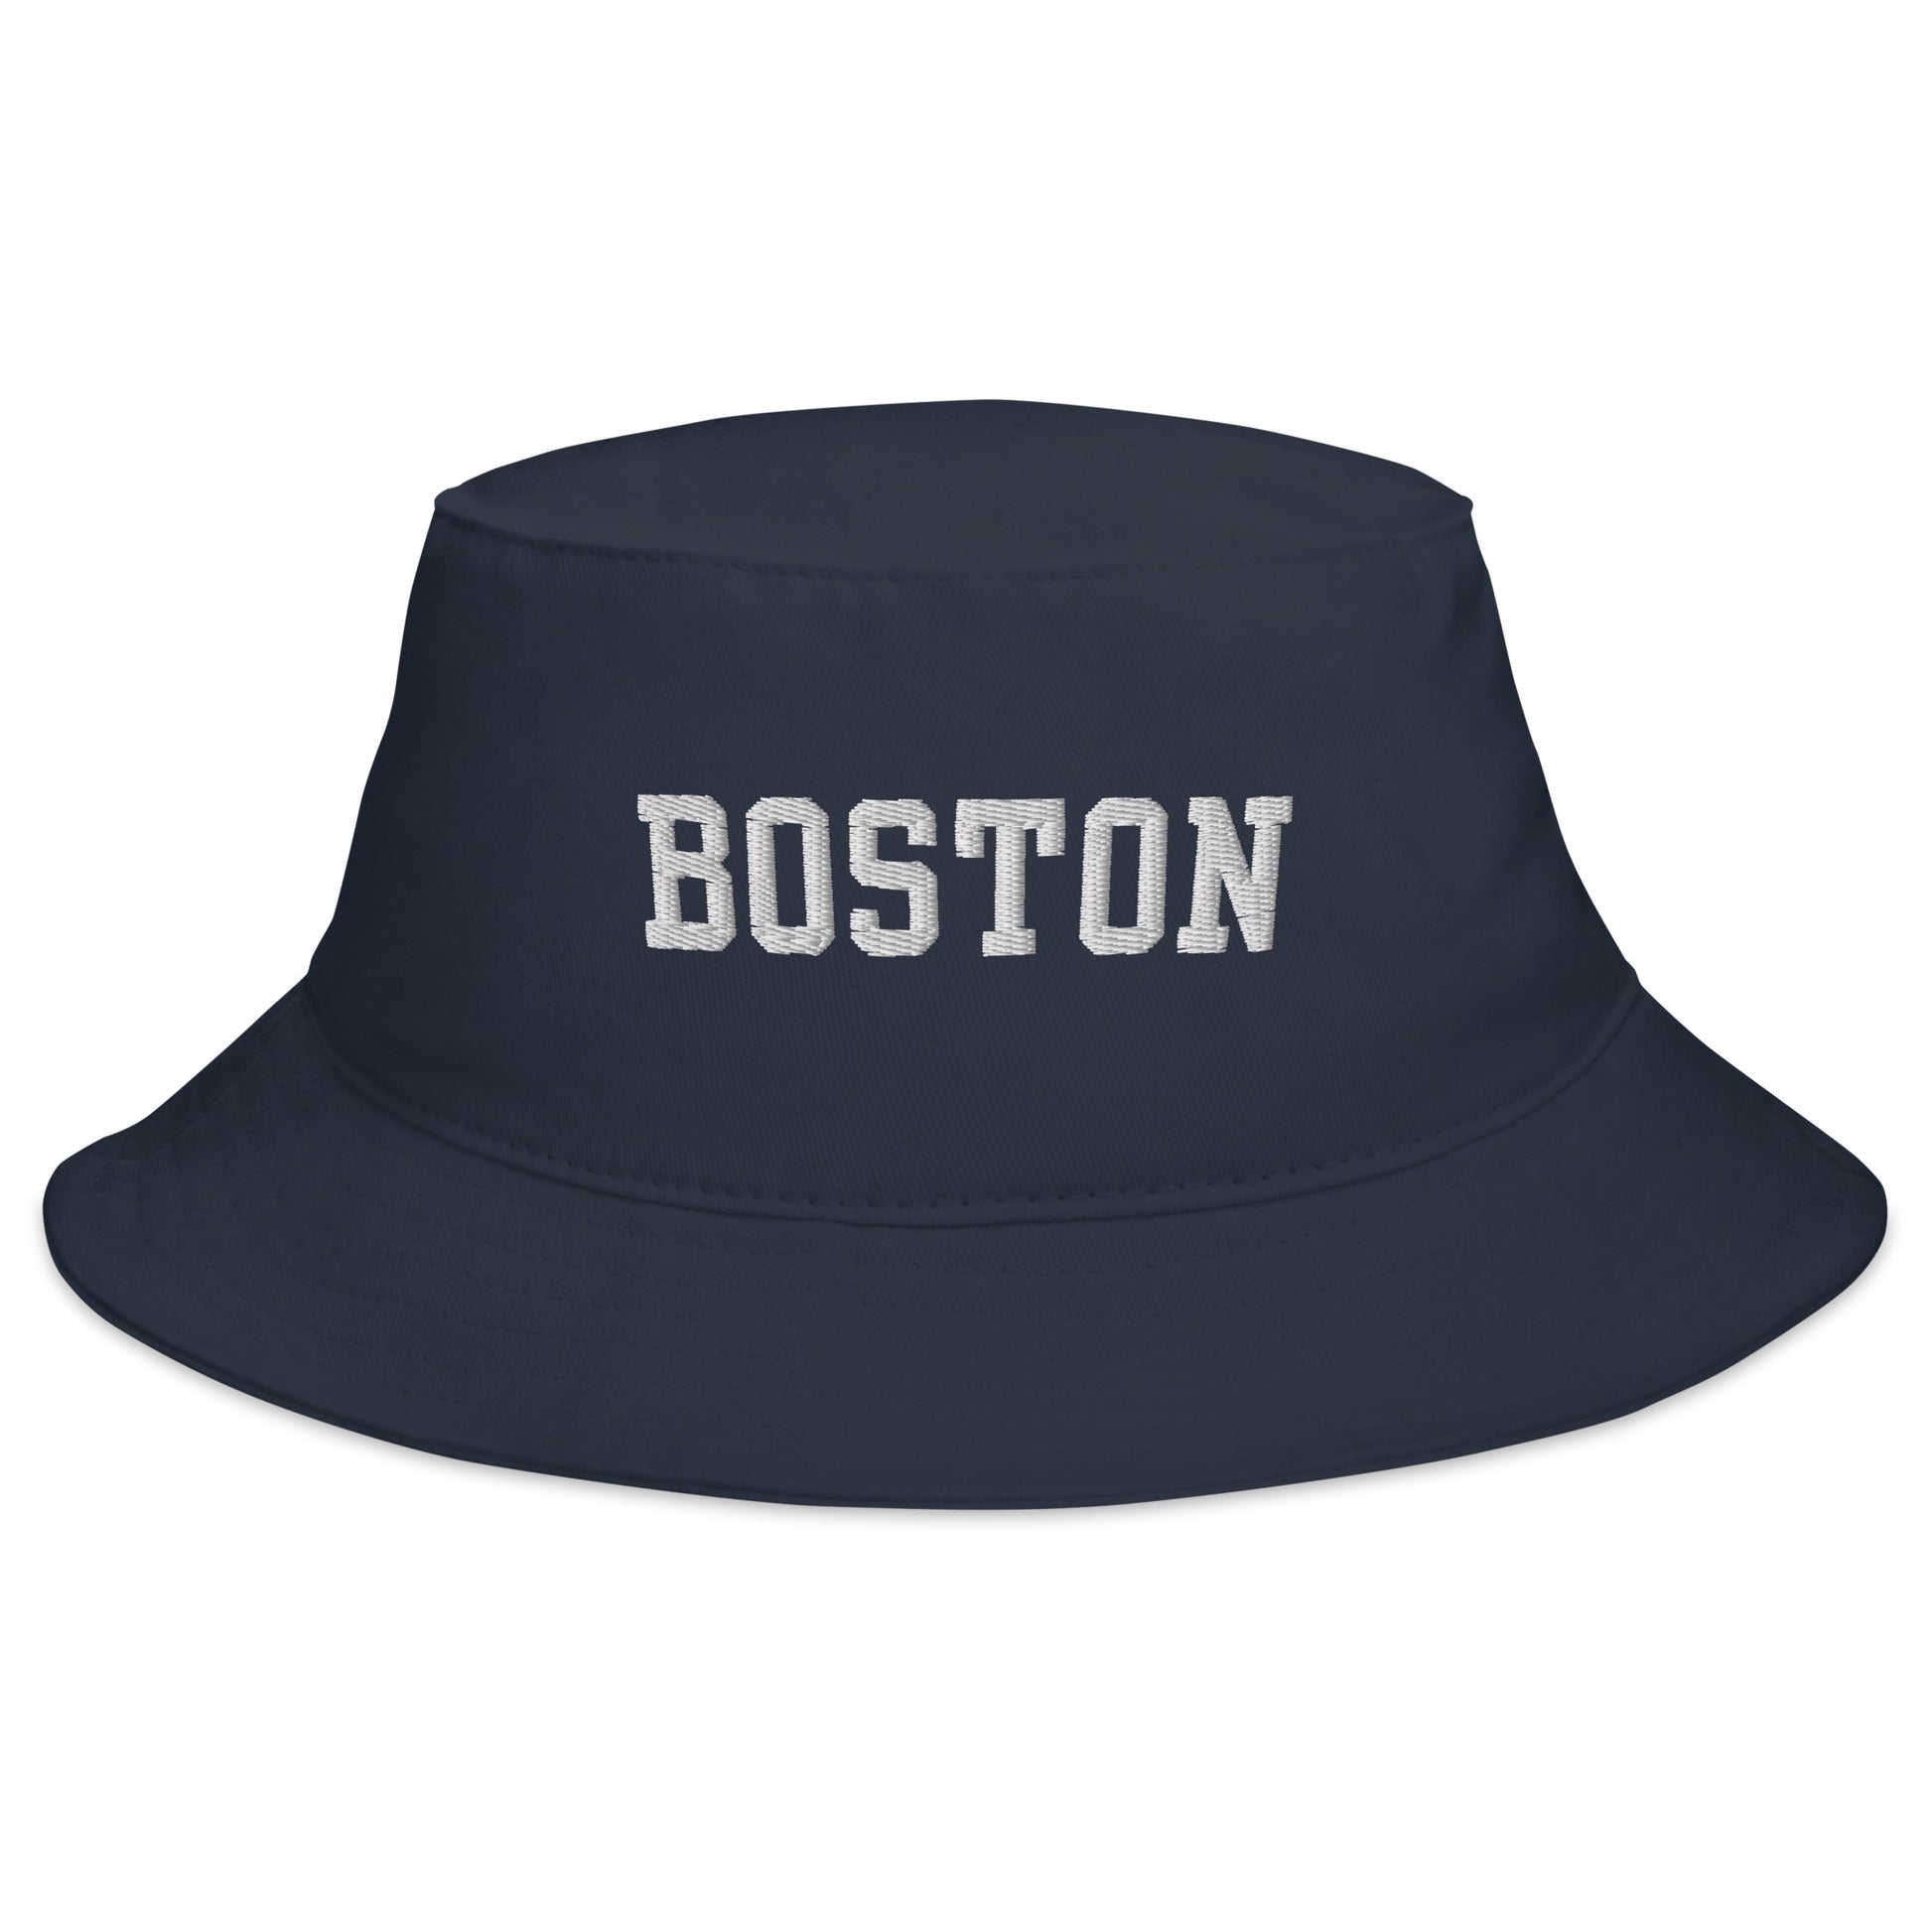 Boston Bucket Hat navy